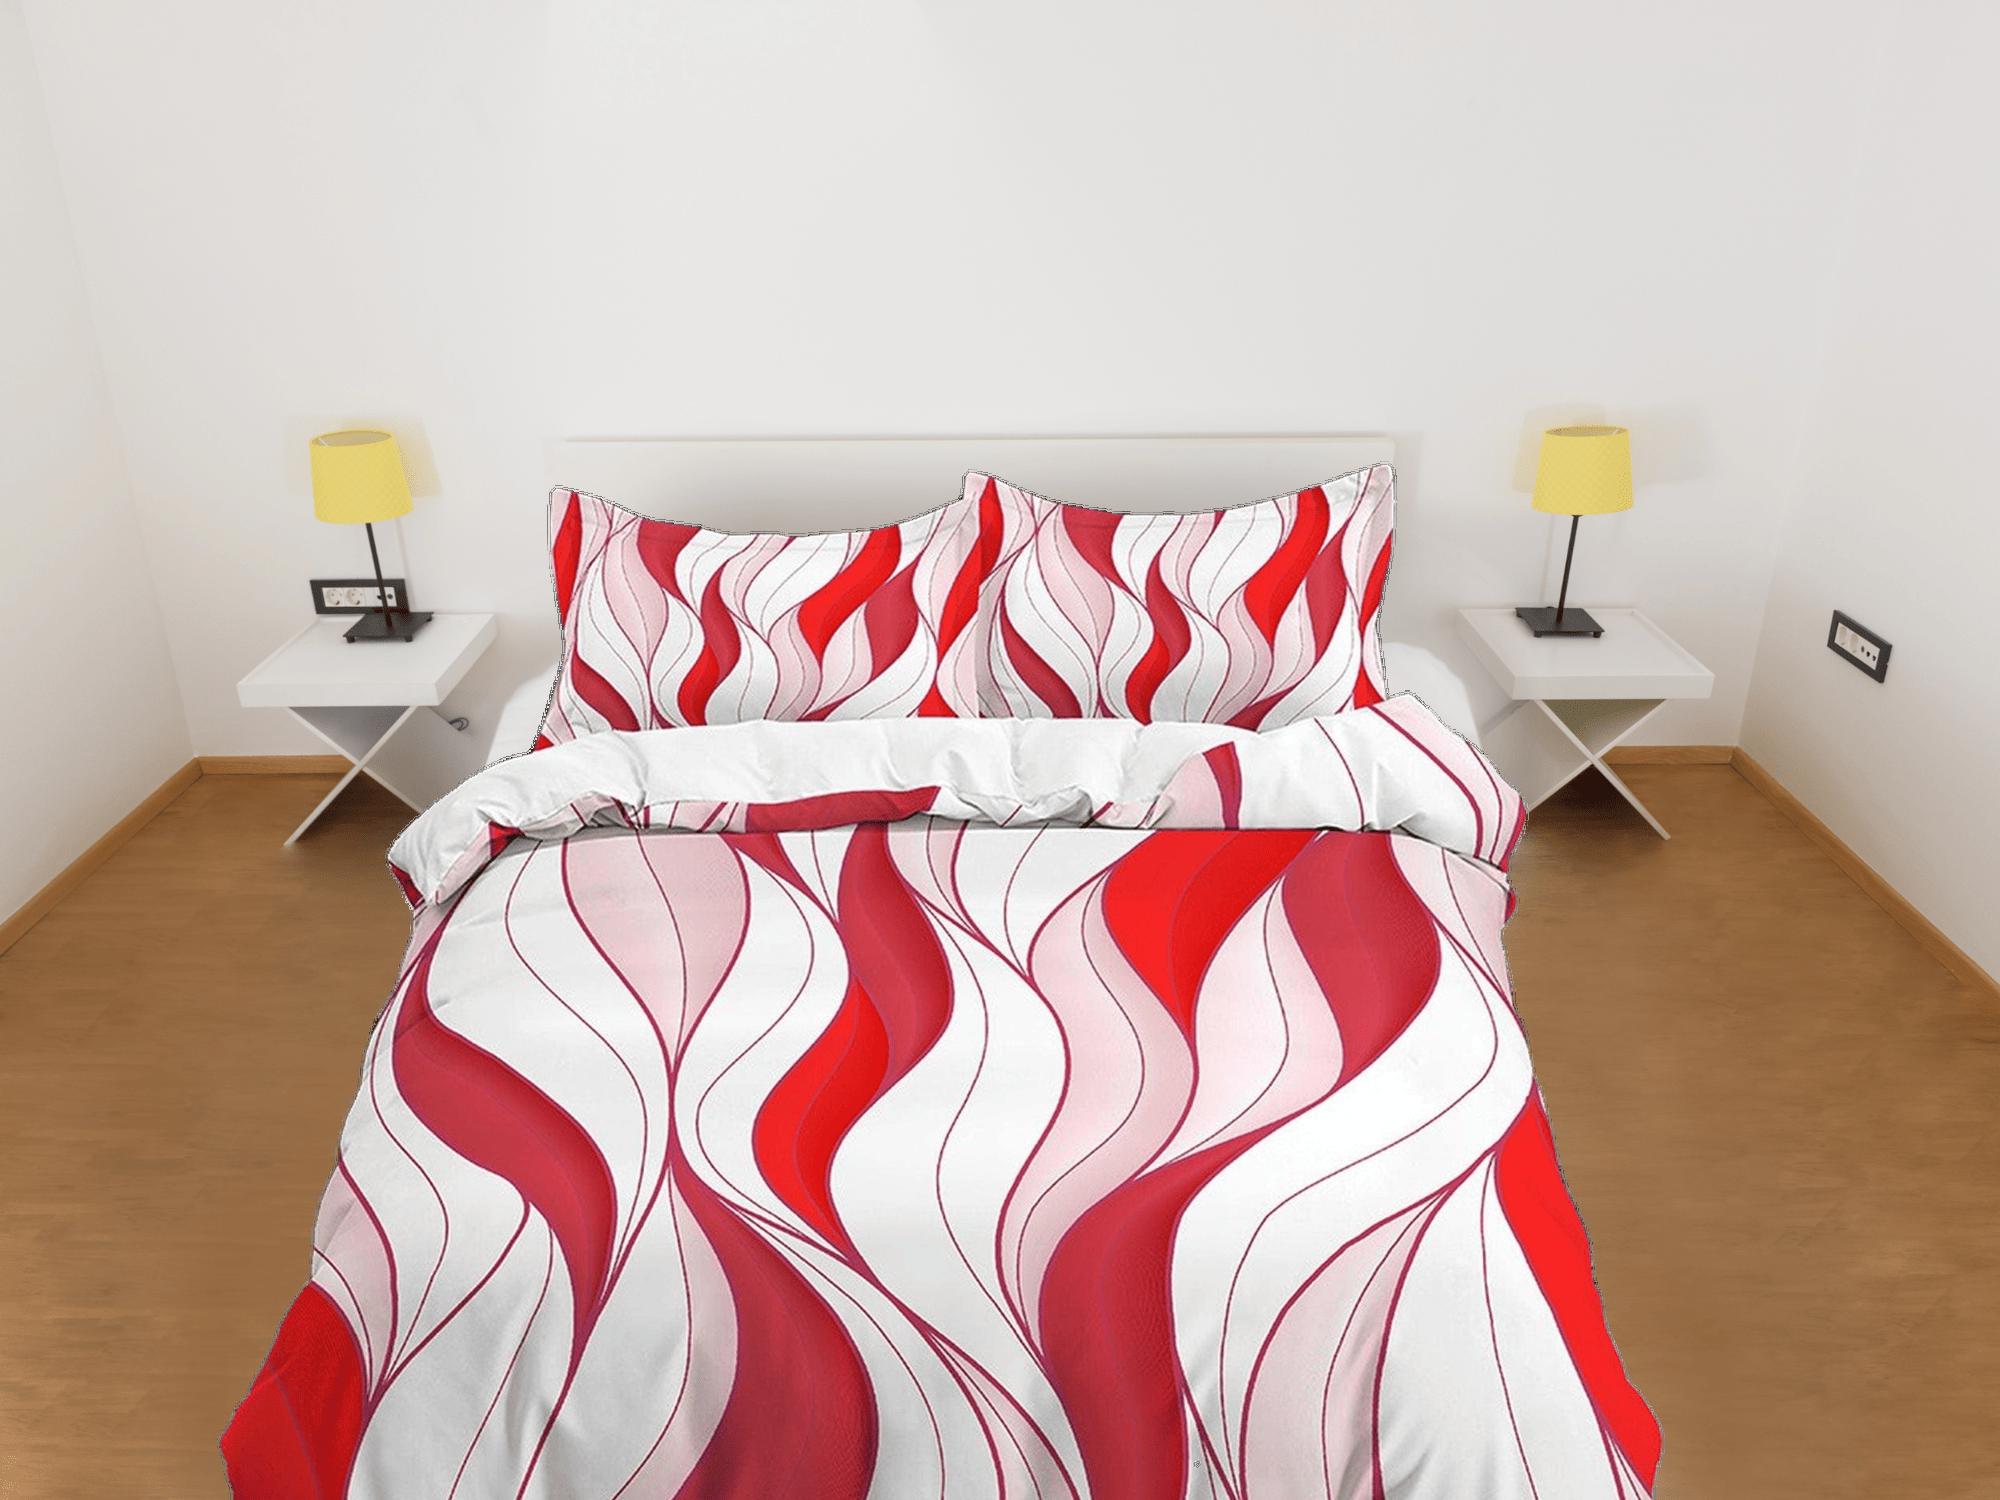 daintyduvet Mid century modern bedroom art set red and white duvet cover, aesthetic room decor boho chic bedding set full, colorful maximalist retro